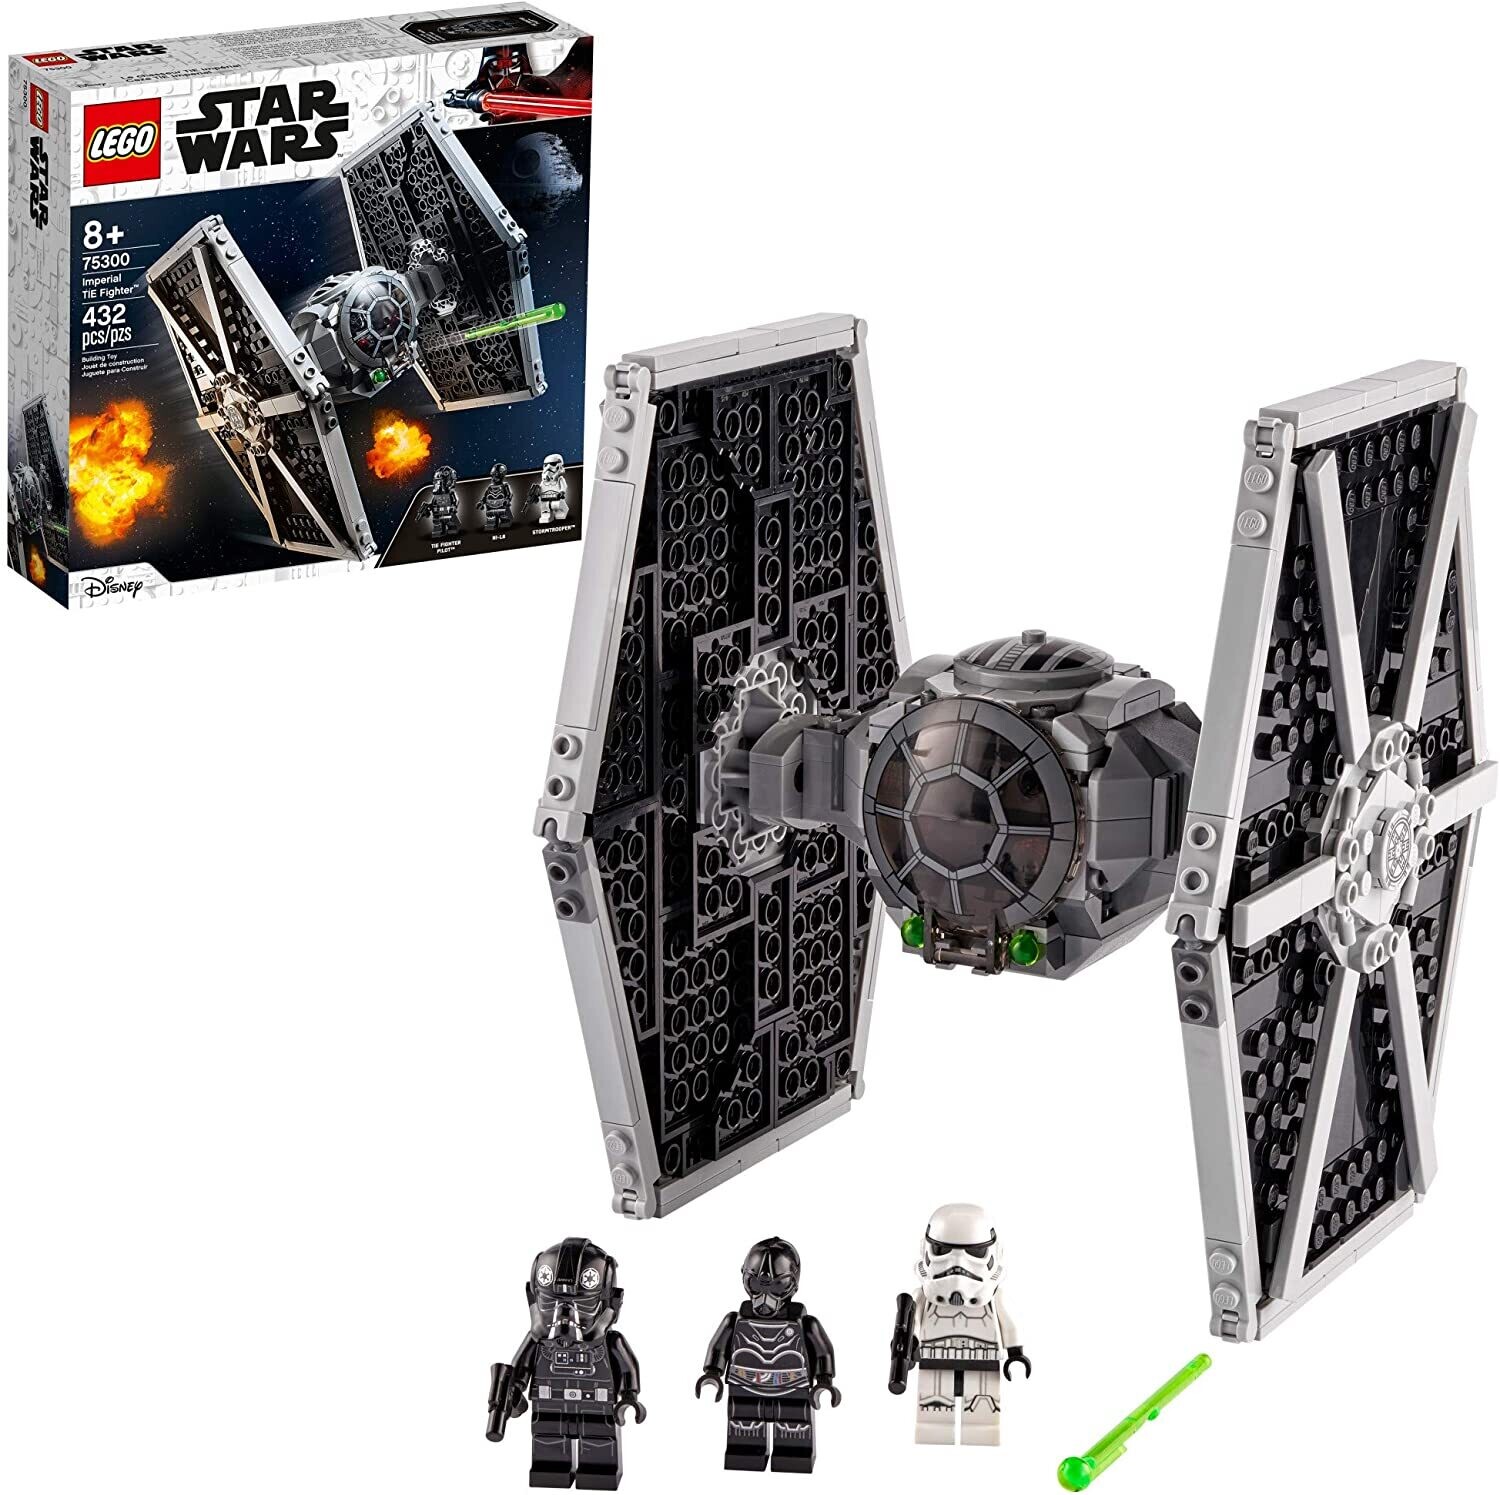 Lego 75300 Star Wars Imperial TIE Fighter